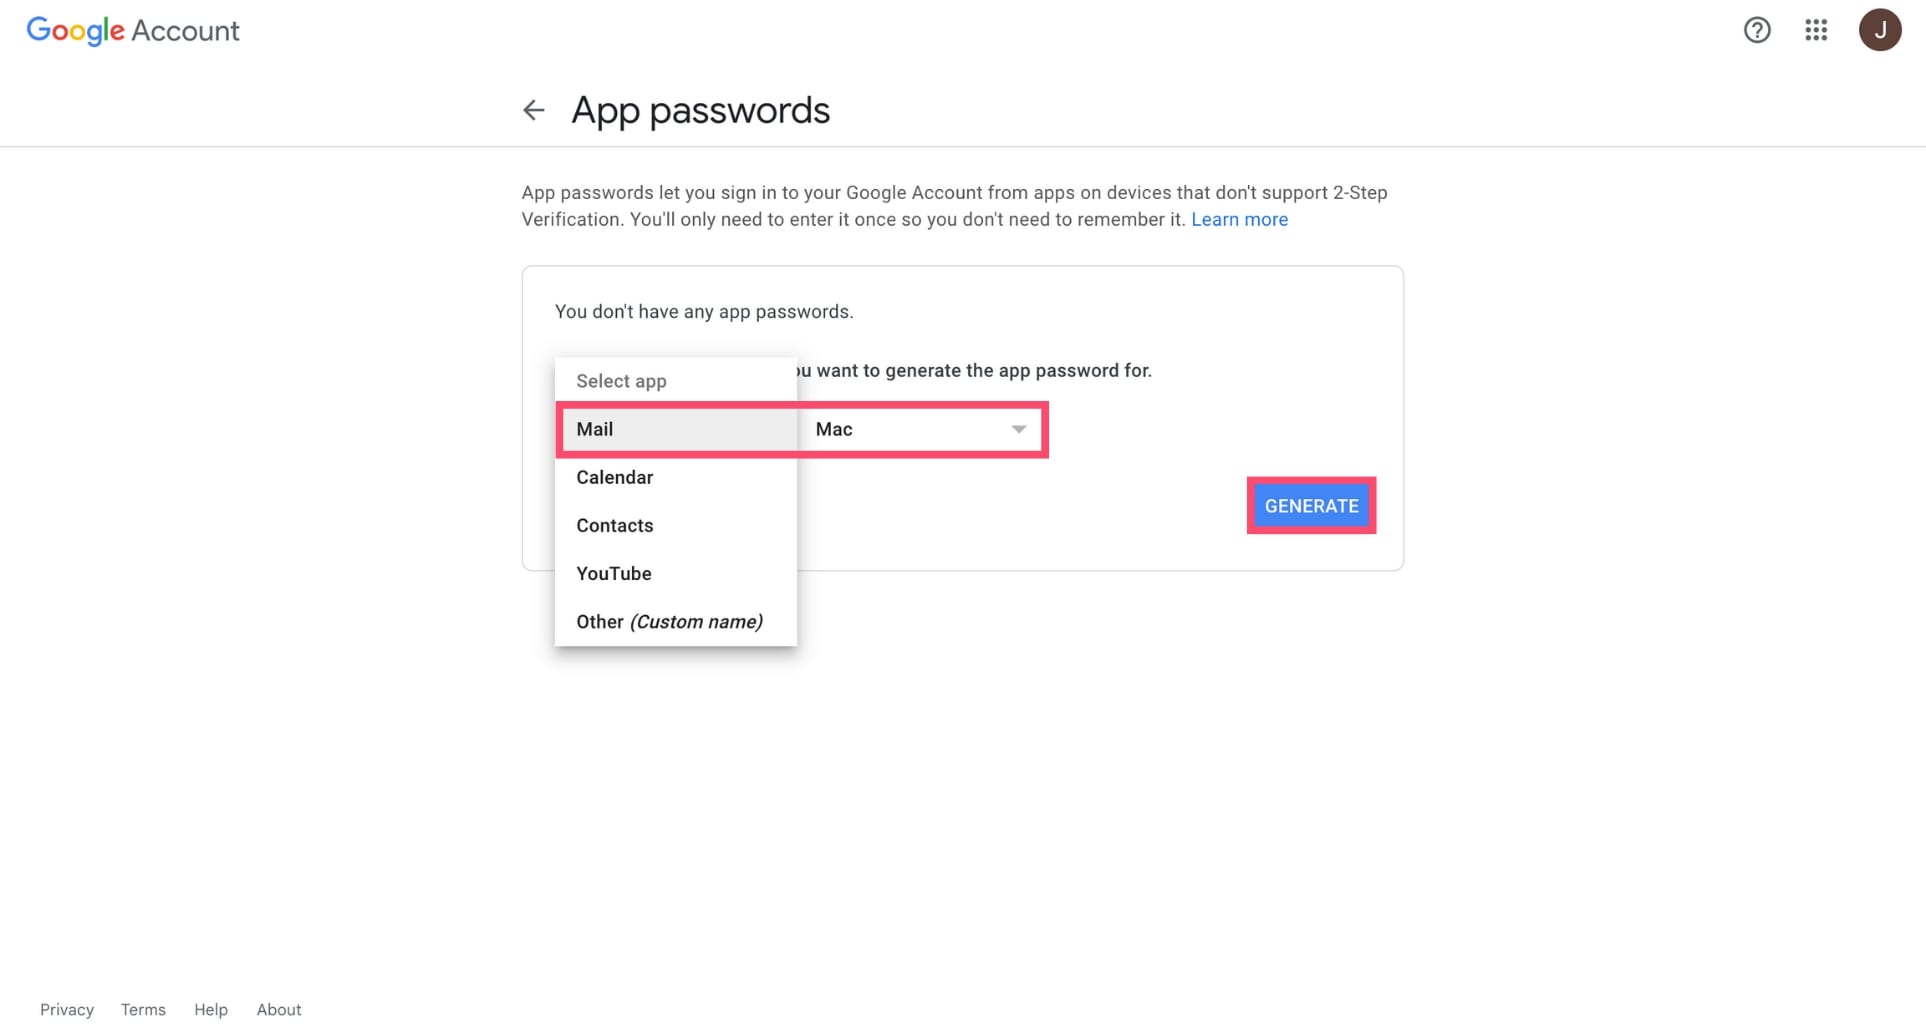 Generate an app password